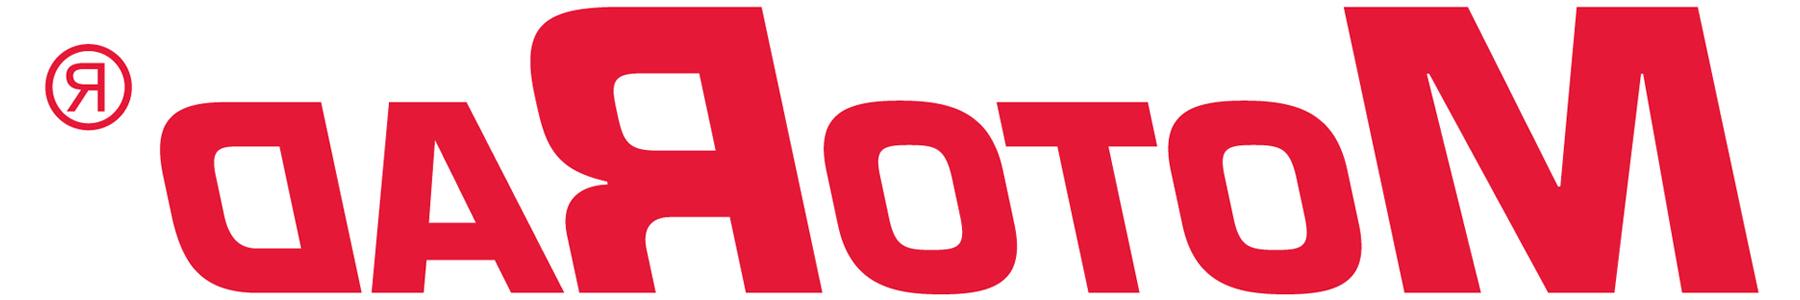 MotoRad logo